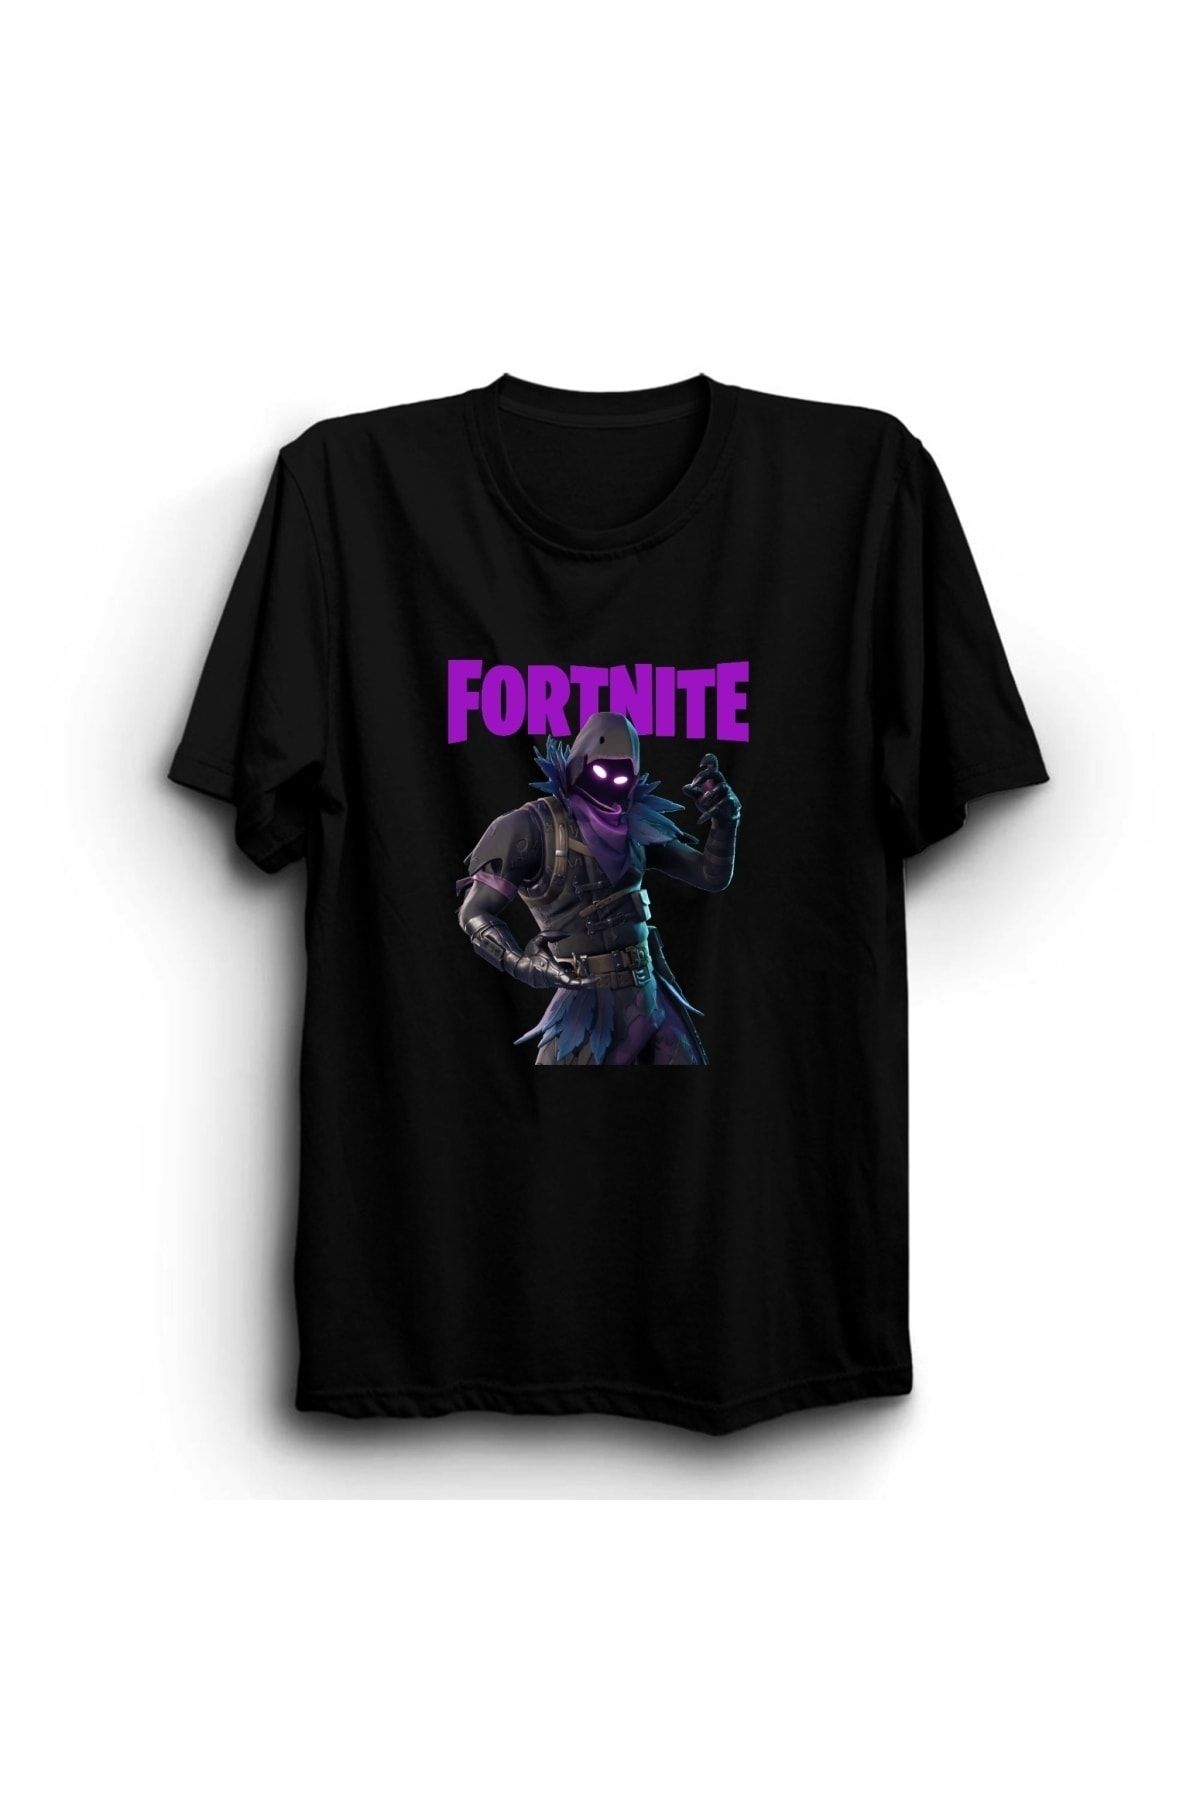 The Fame Fortnite, Corvo, Oyun Game Tişört